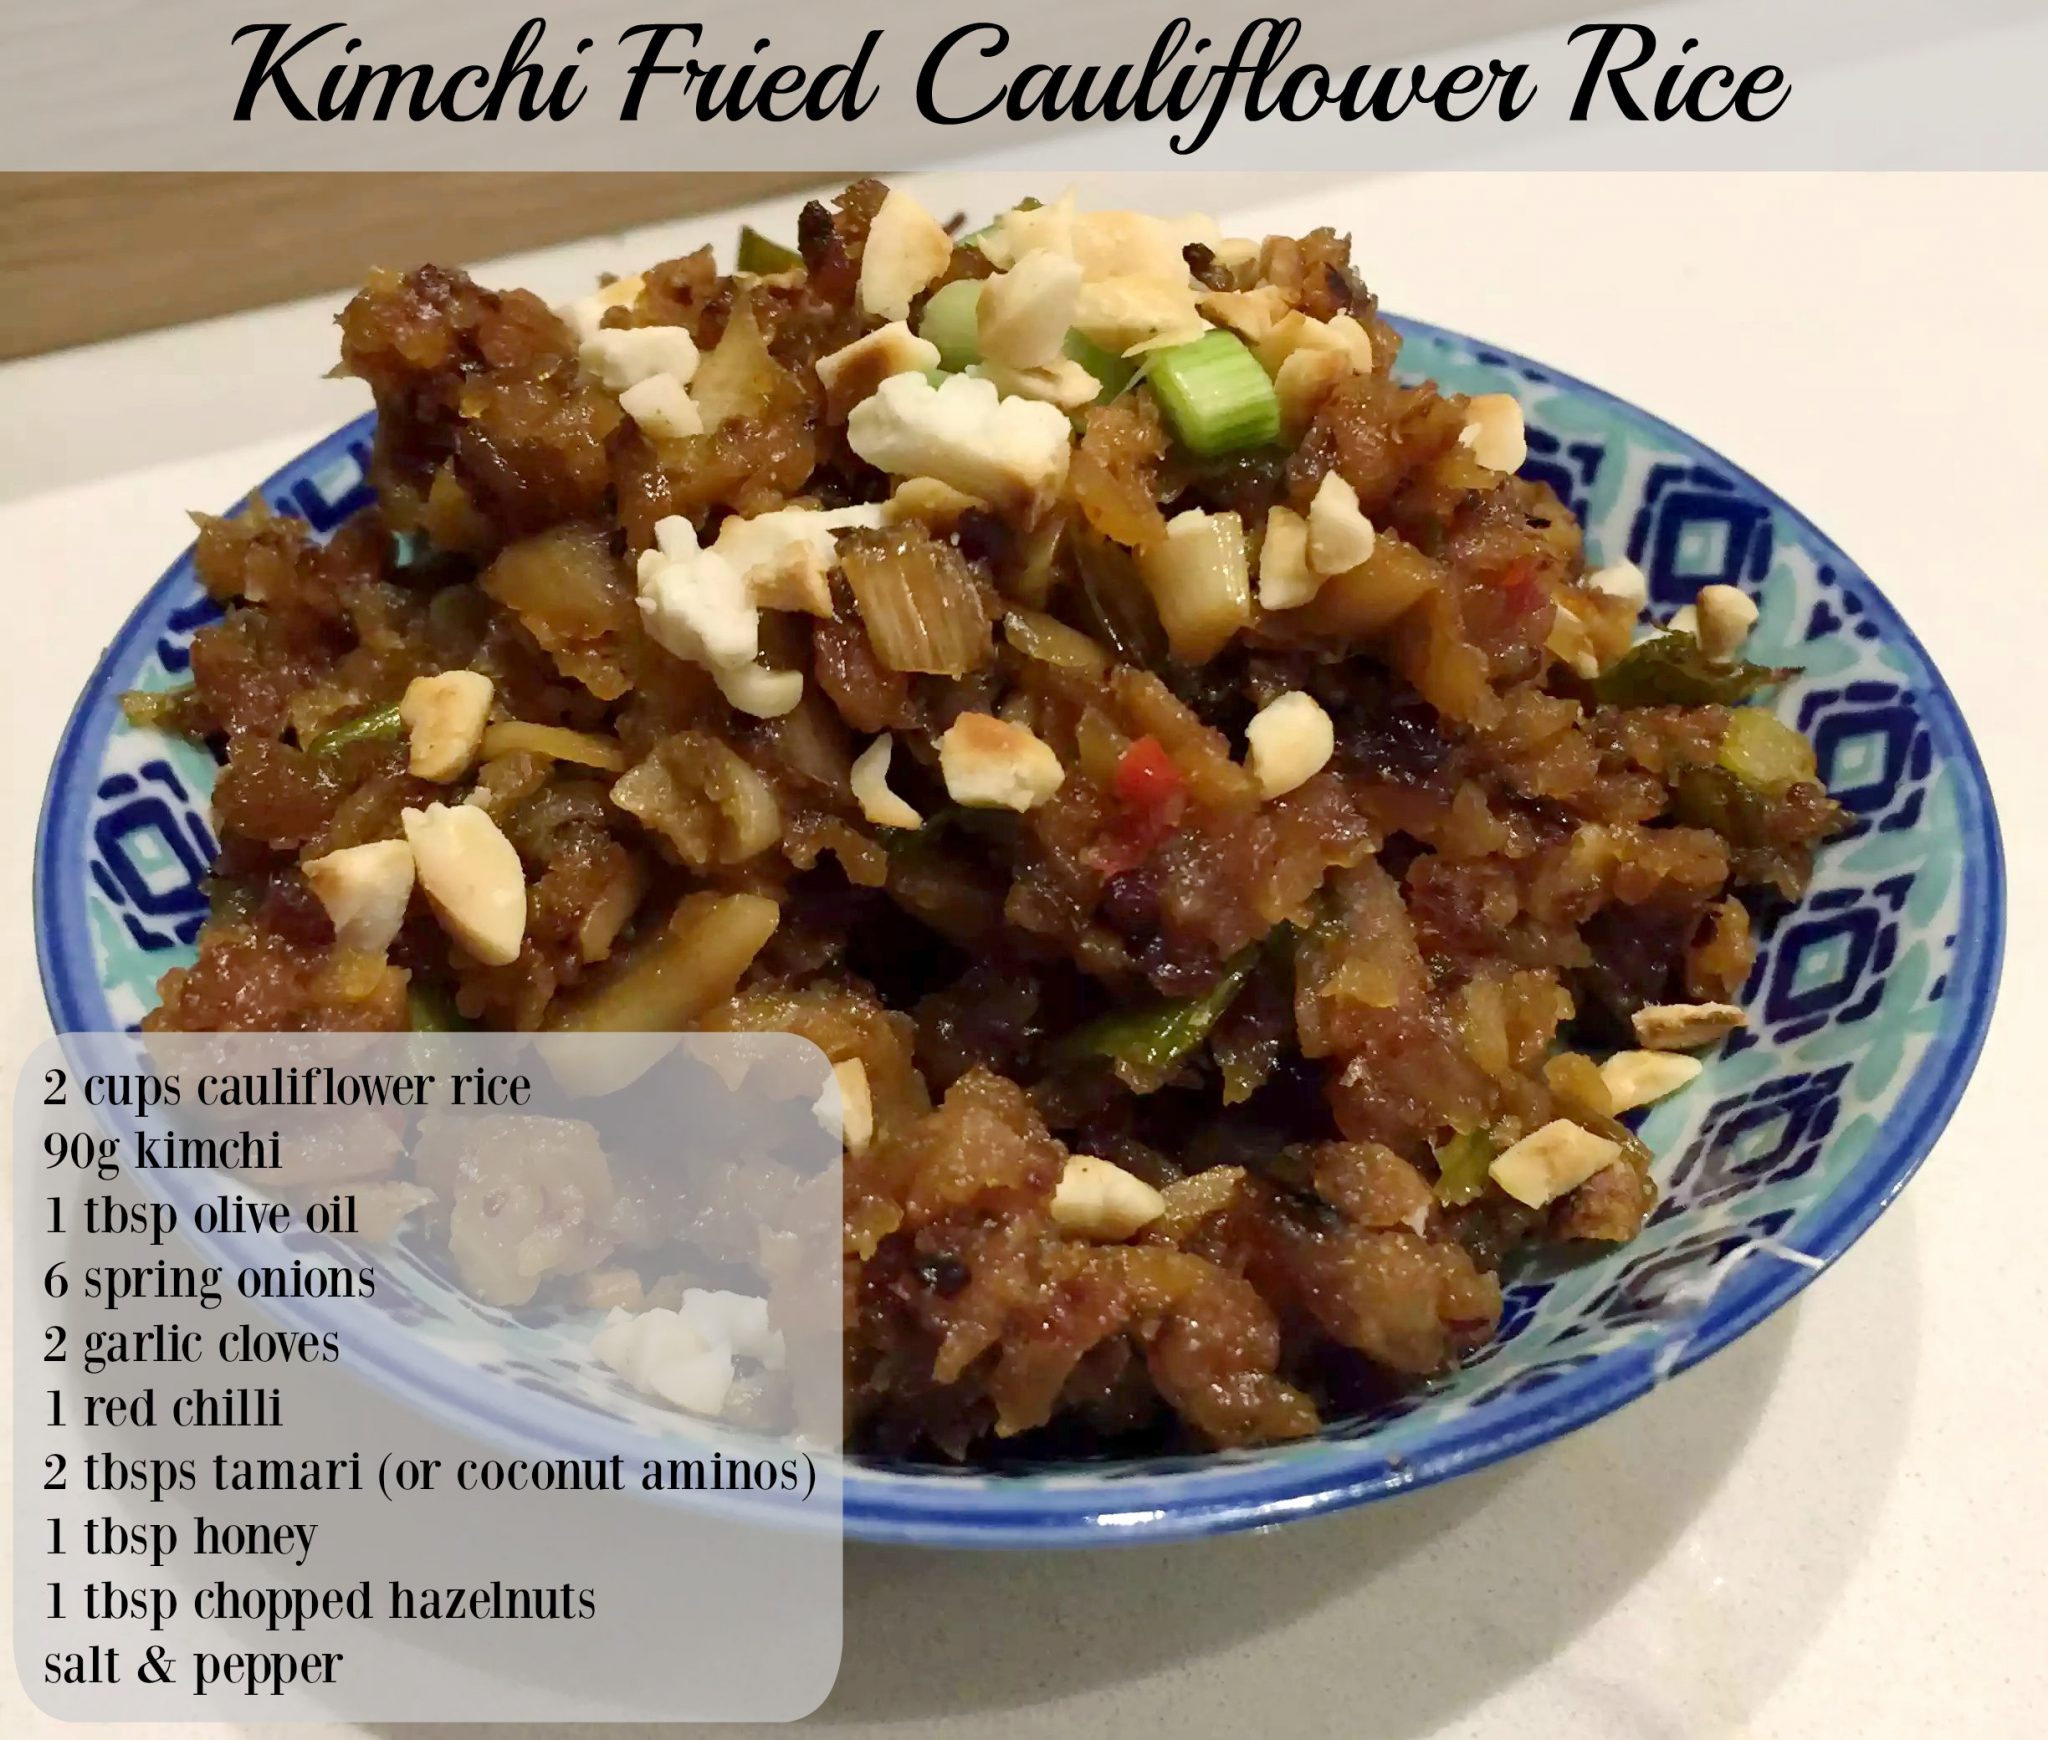 Kimchi Fried Cauliflower Rice by Emma Eats & Explores - Paleo, Gluten-Free, Grain-Free, Refined Sugar-Free, Vegan, Vegetarian, Dairy-Free